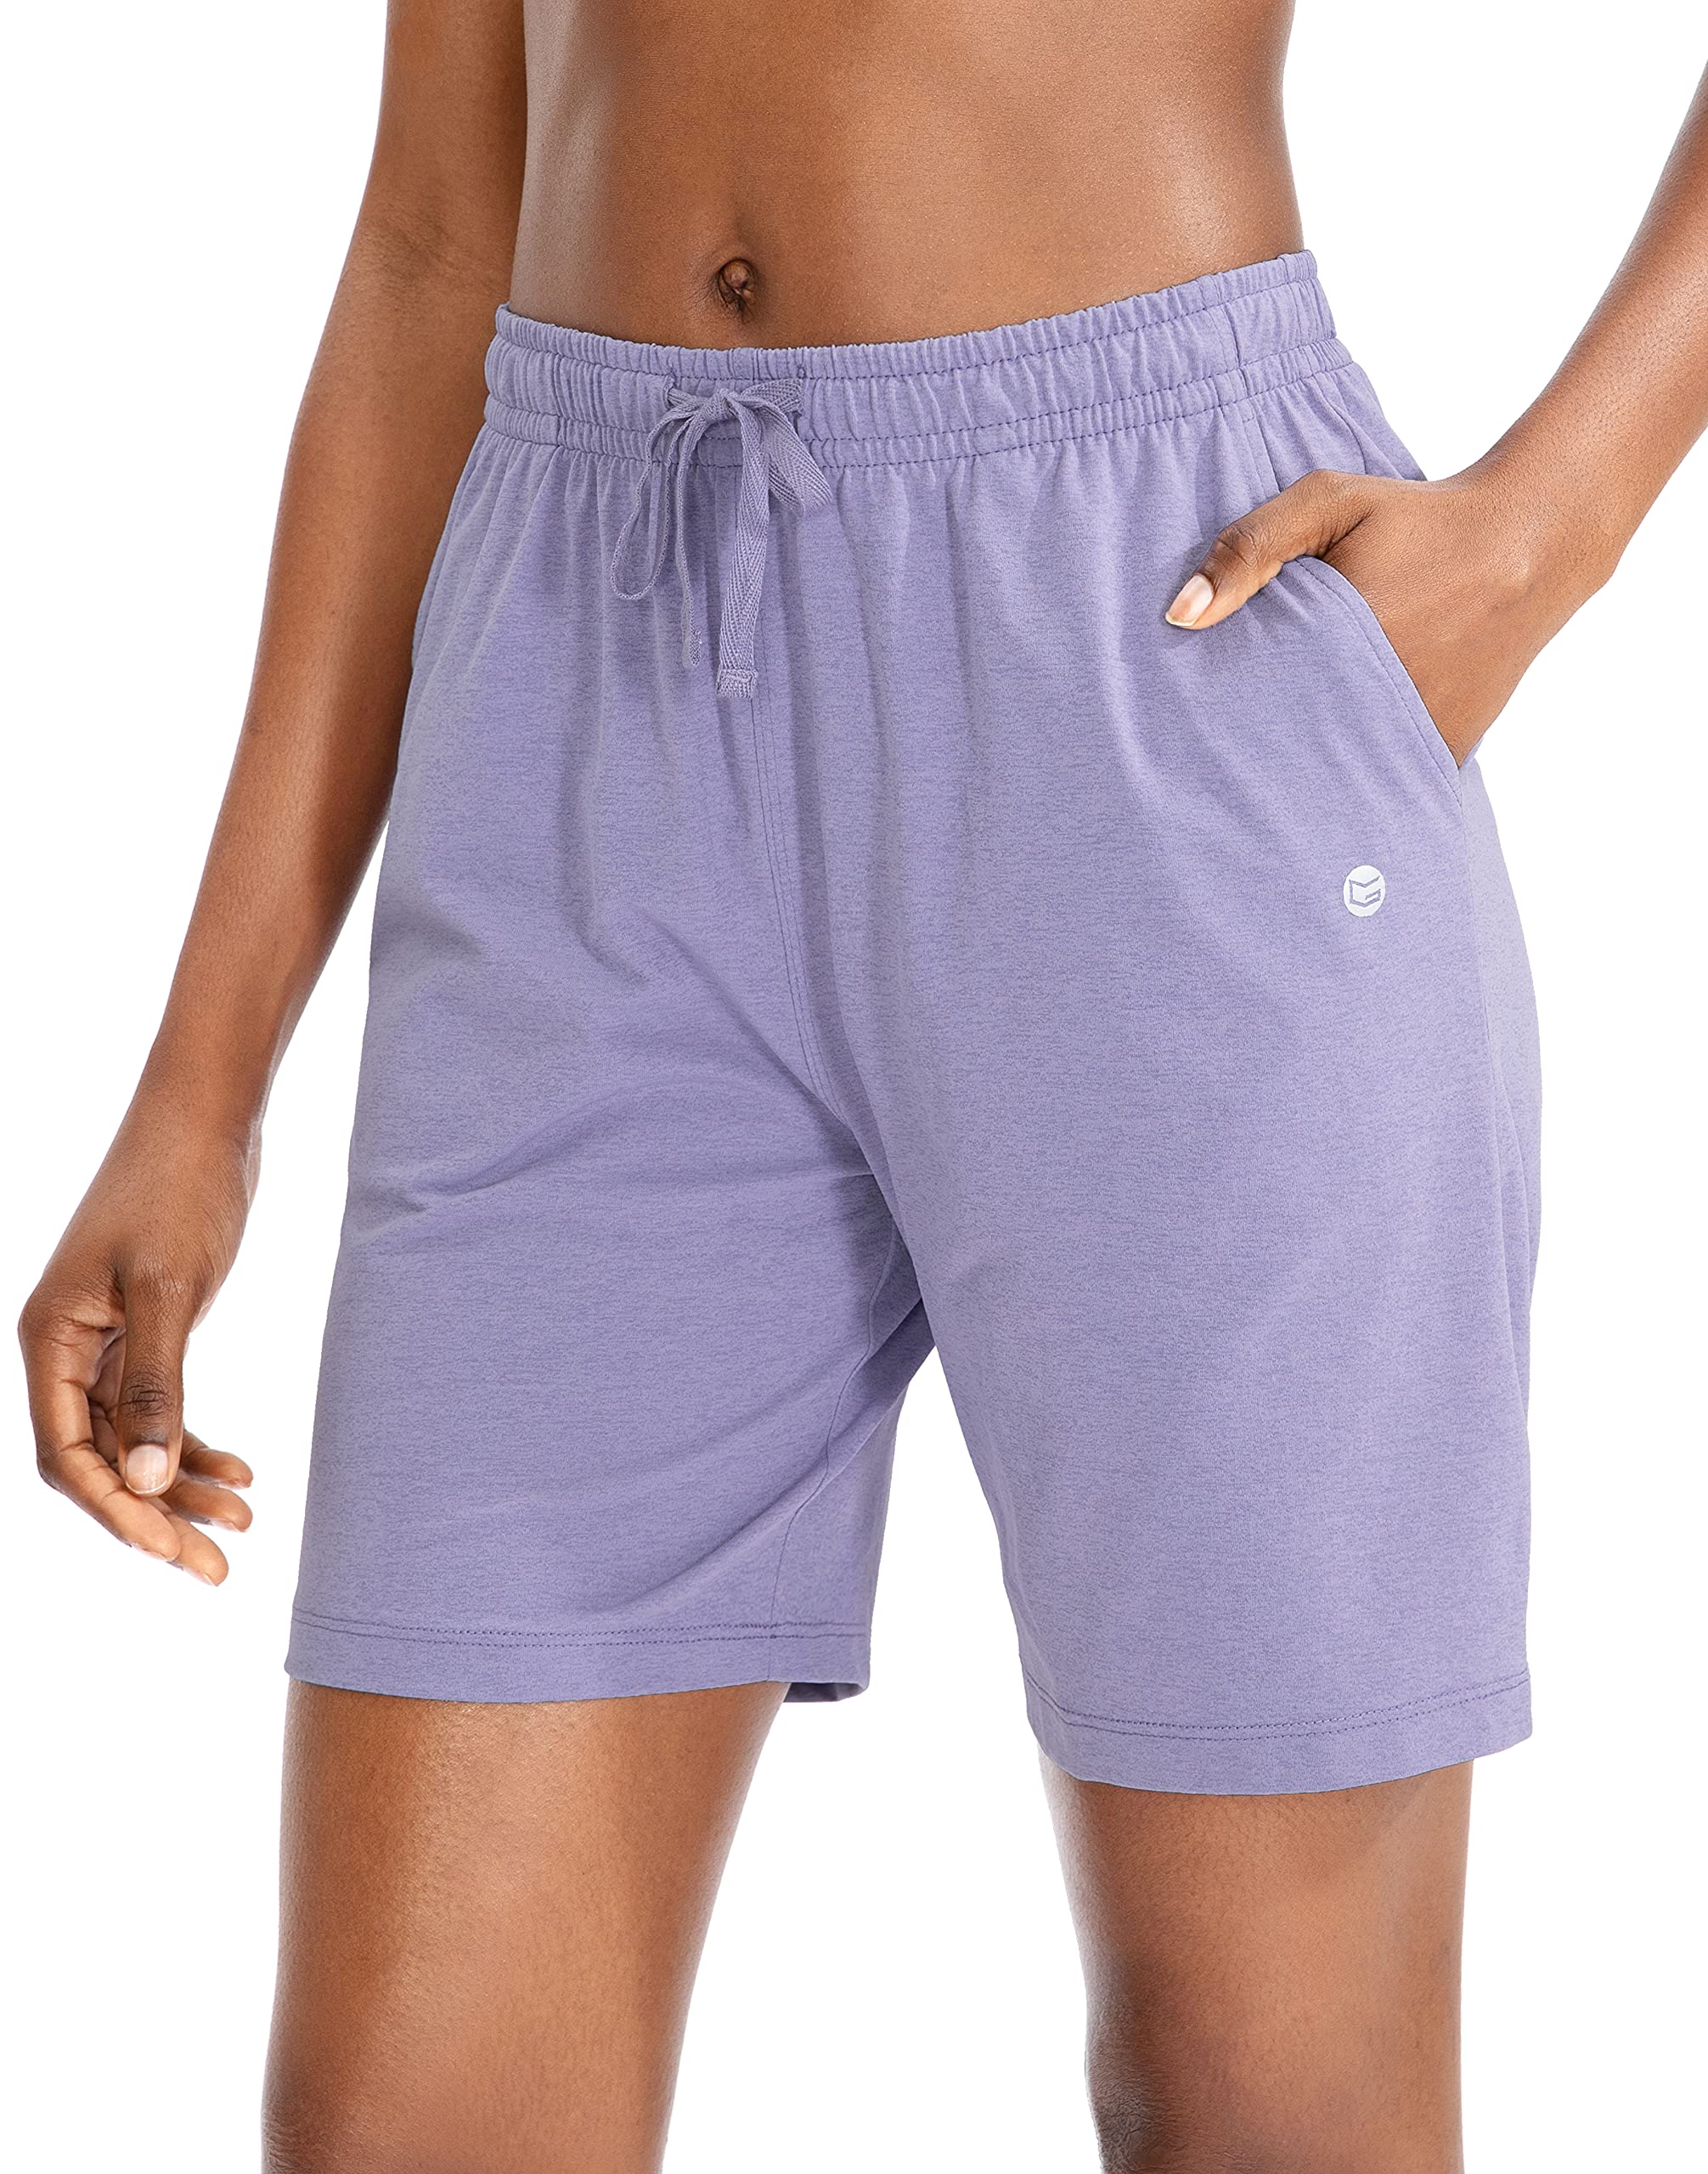 G Gradual Womens Bermuda Shorts Jersey Shorts with Deep Pockets 7 Long Shorts for Women Lounge Walking Athletic (Purple, Small)